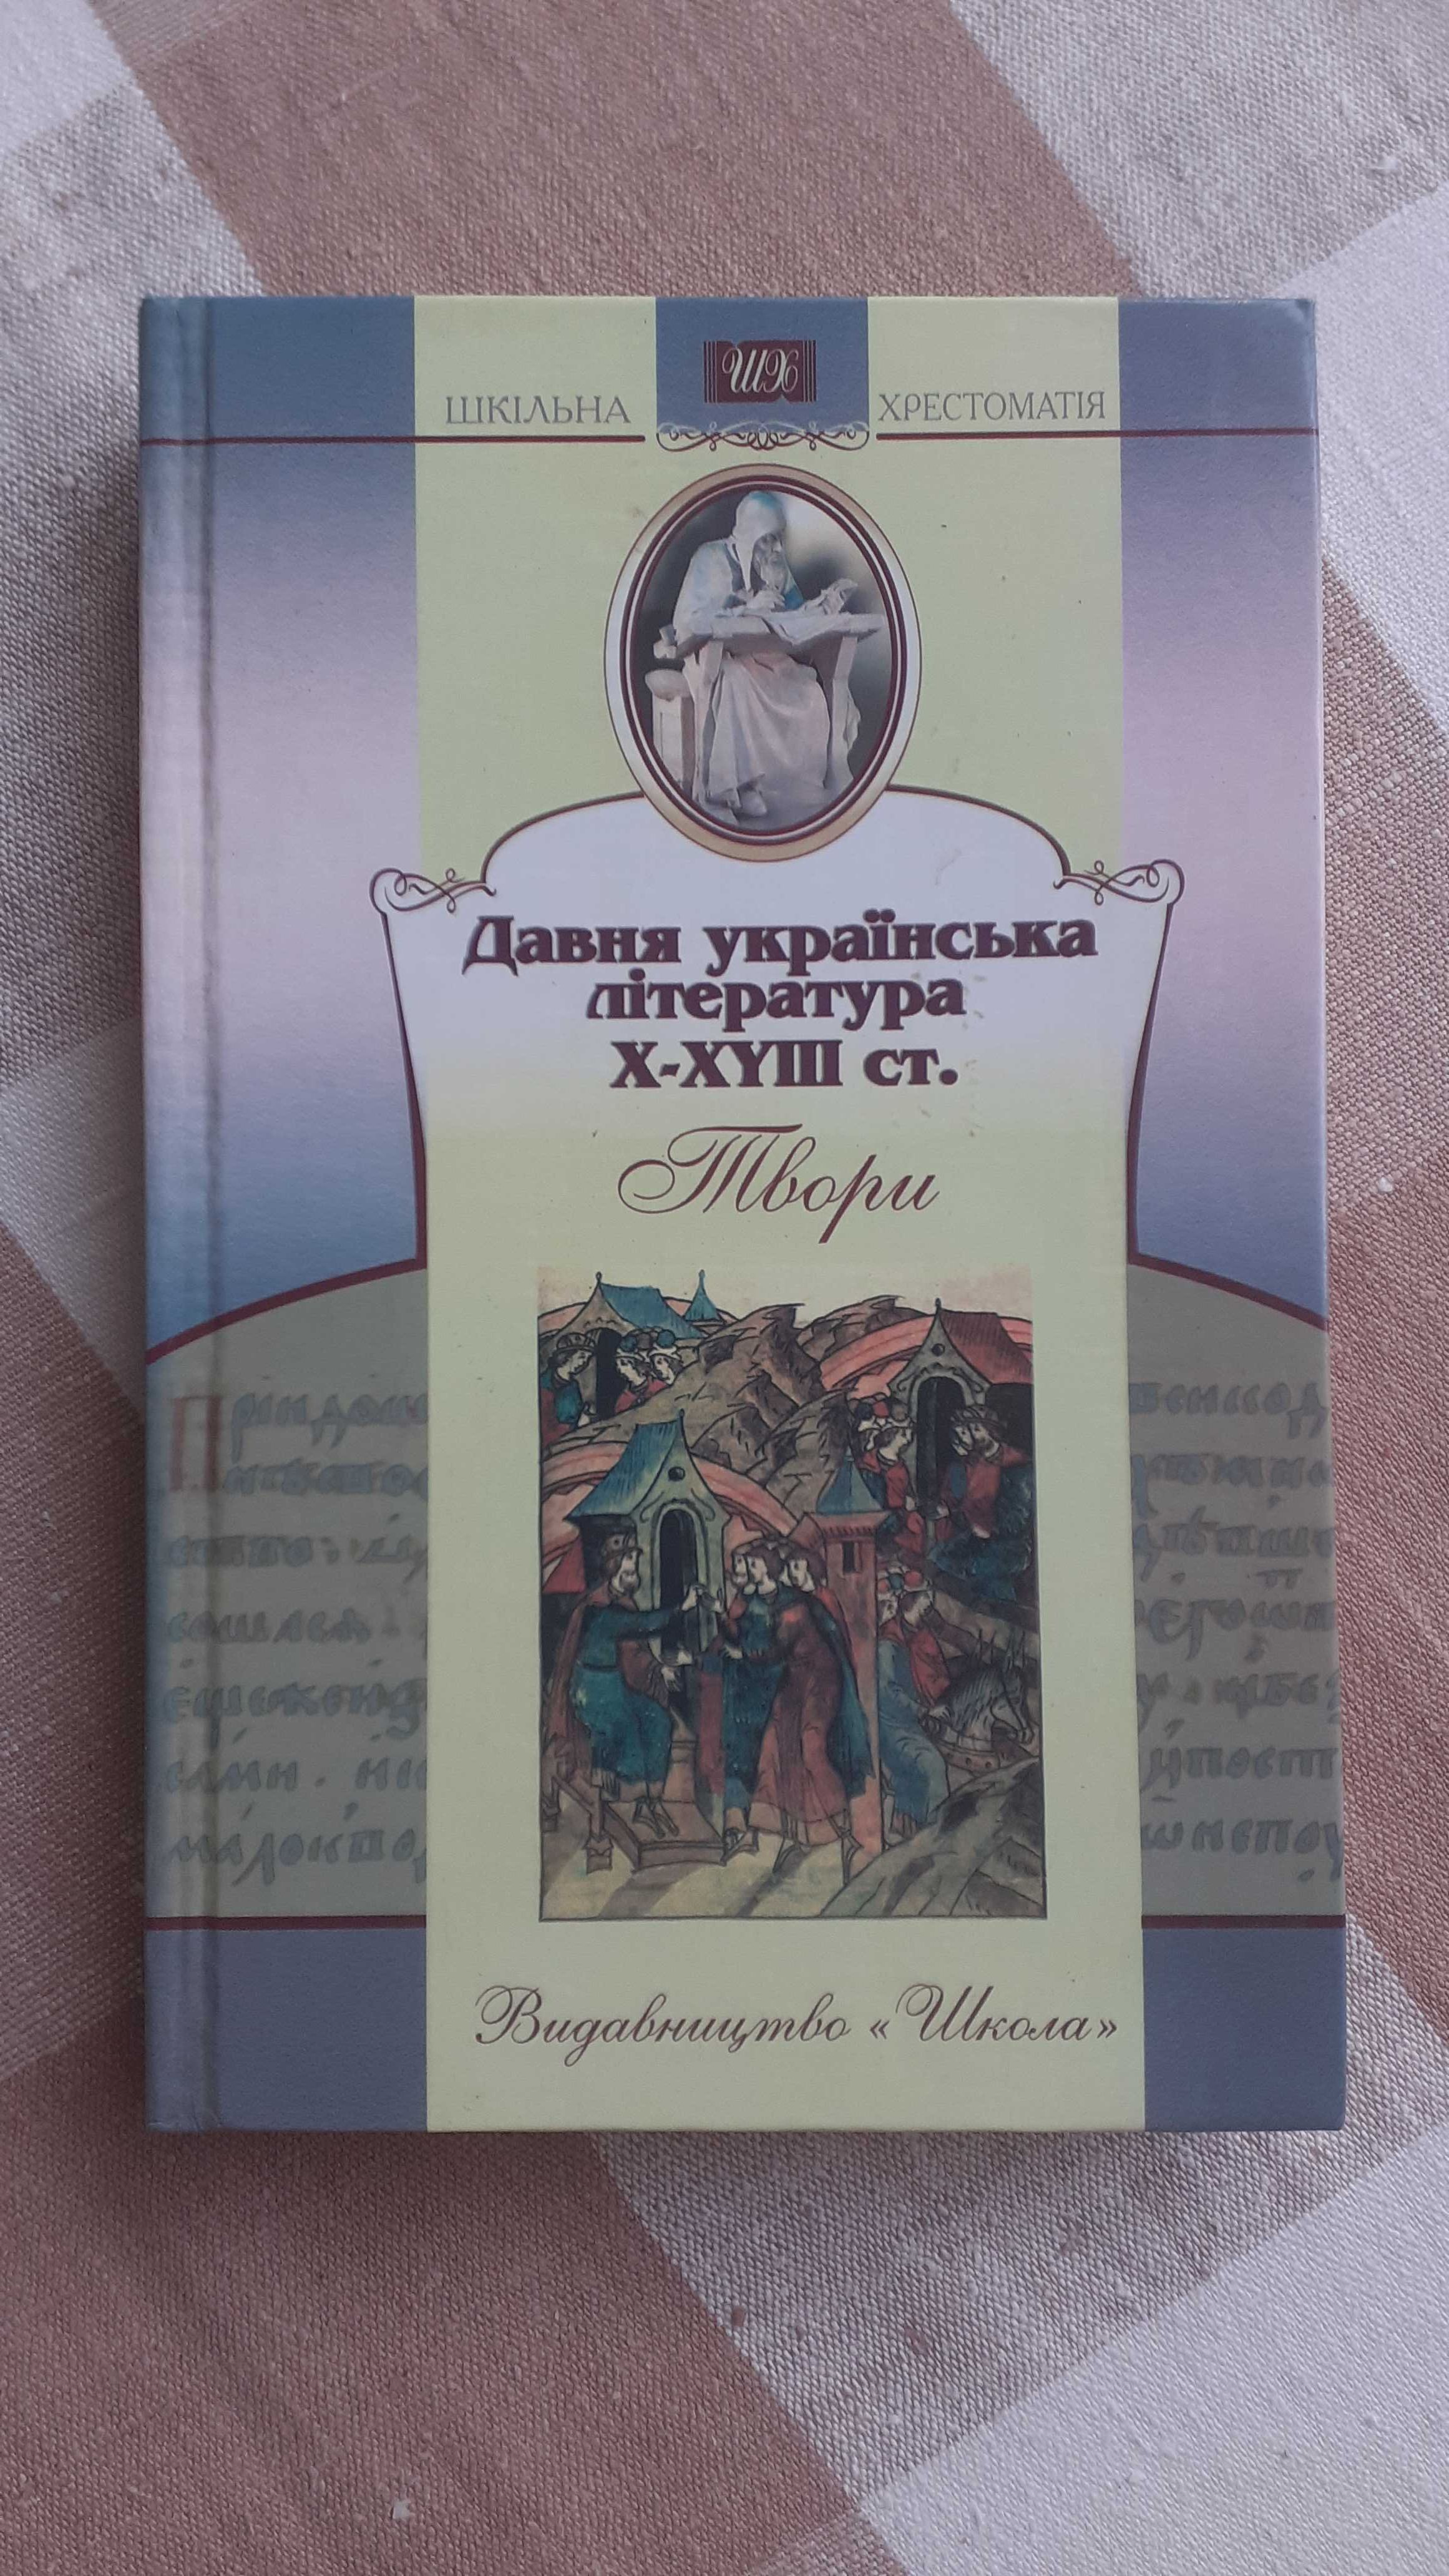 Давня українська література 10-18 століття